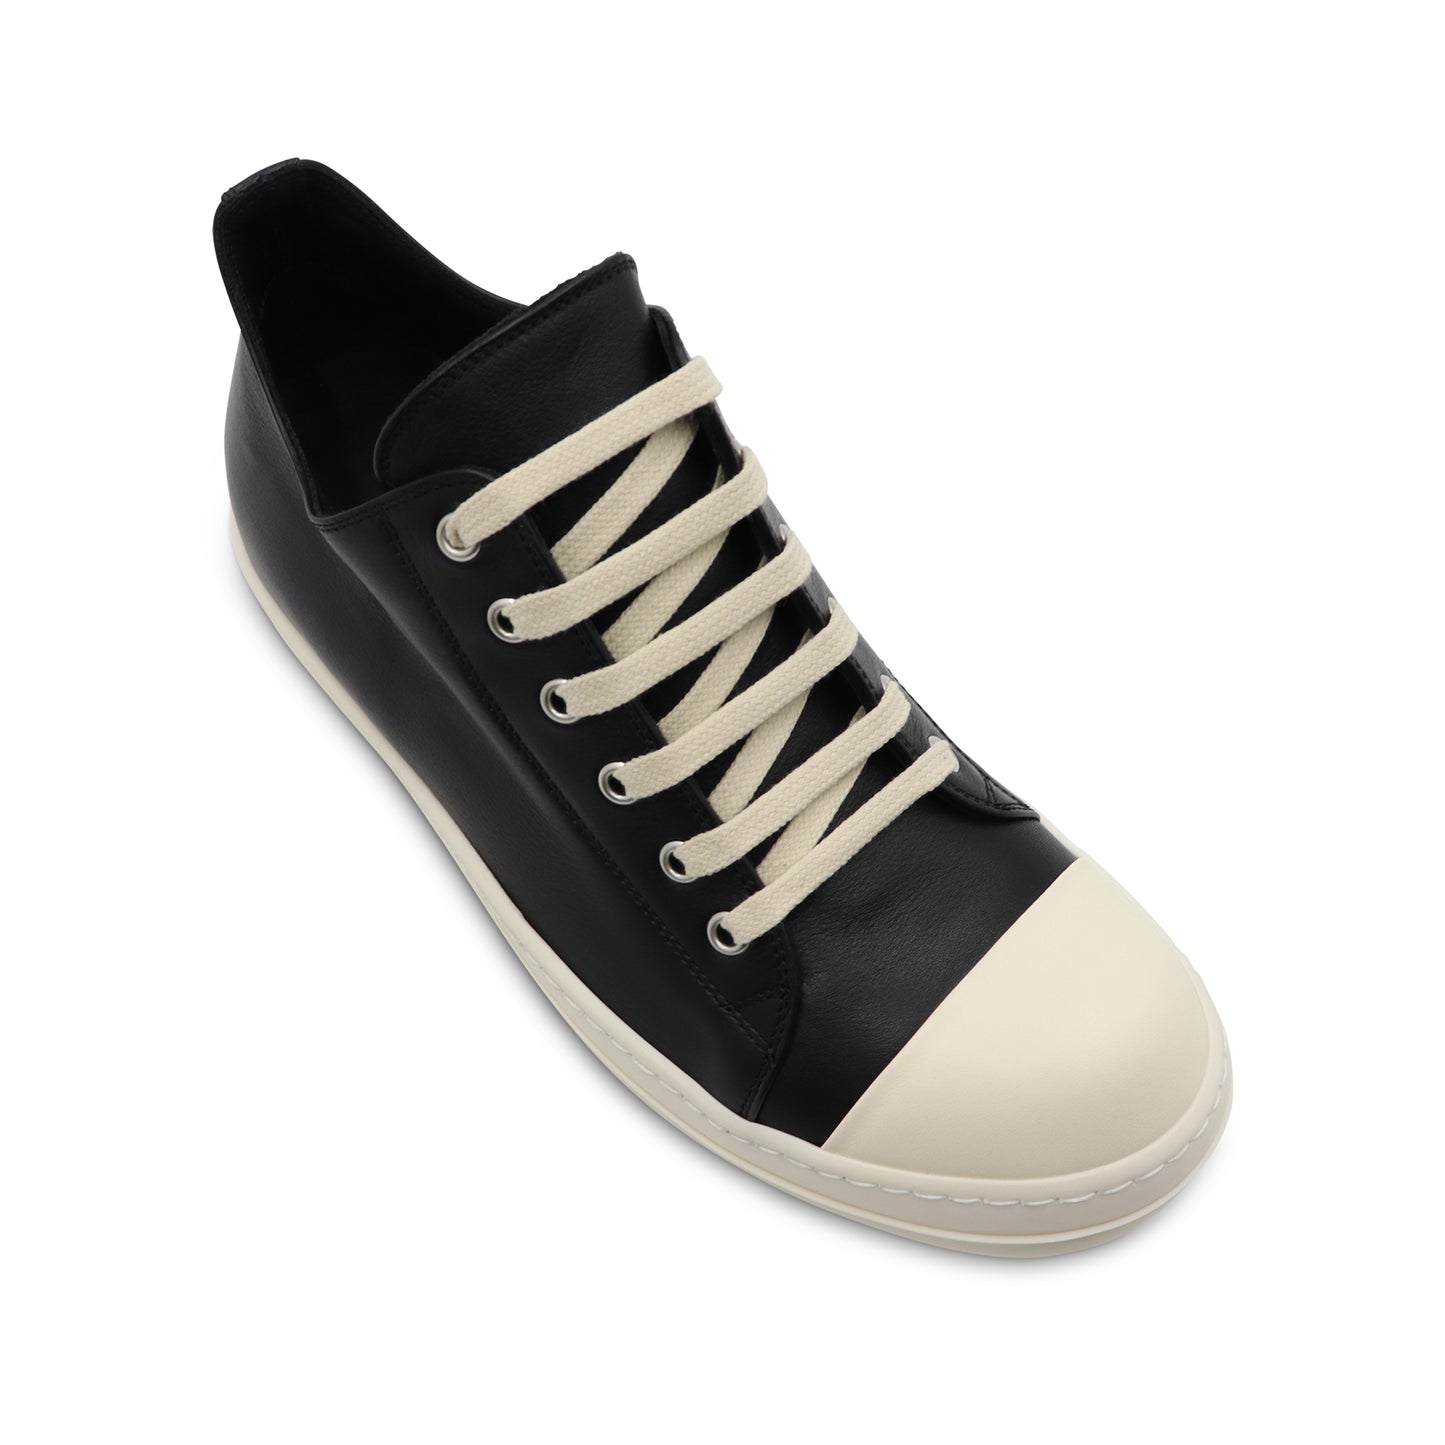 Ramones Leather Low Sneaker in Black